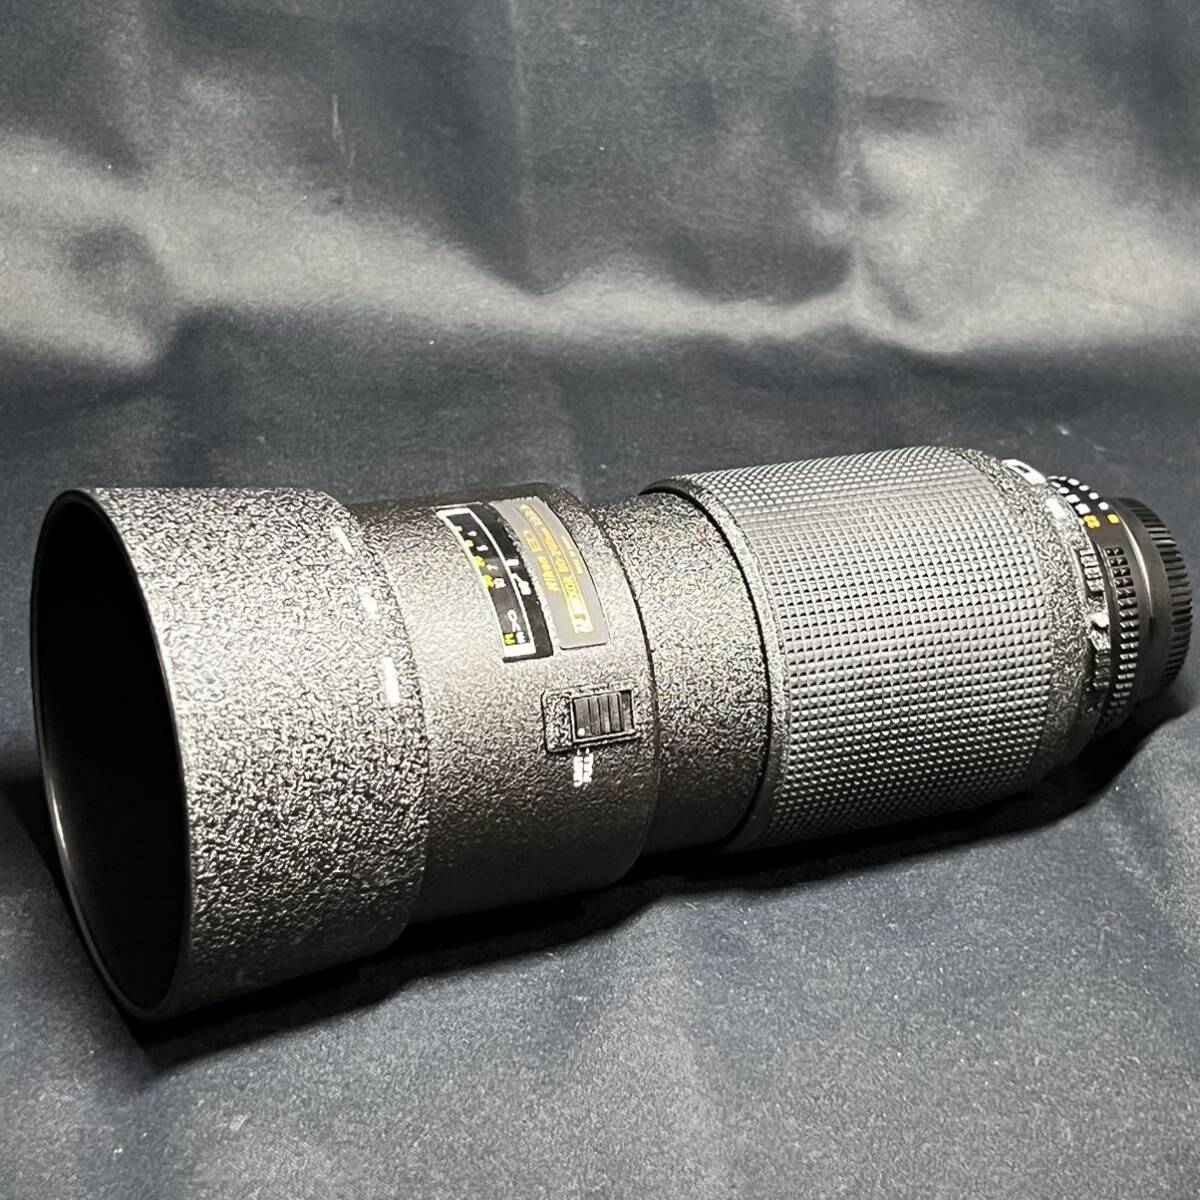 Nikon ニコン ED AF NIKKOR 80-200mm 1:2.8 D カメラレンズ/Nikon HB-7 レンズフード レンズキャップ付き 美品の画像2